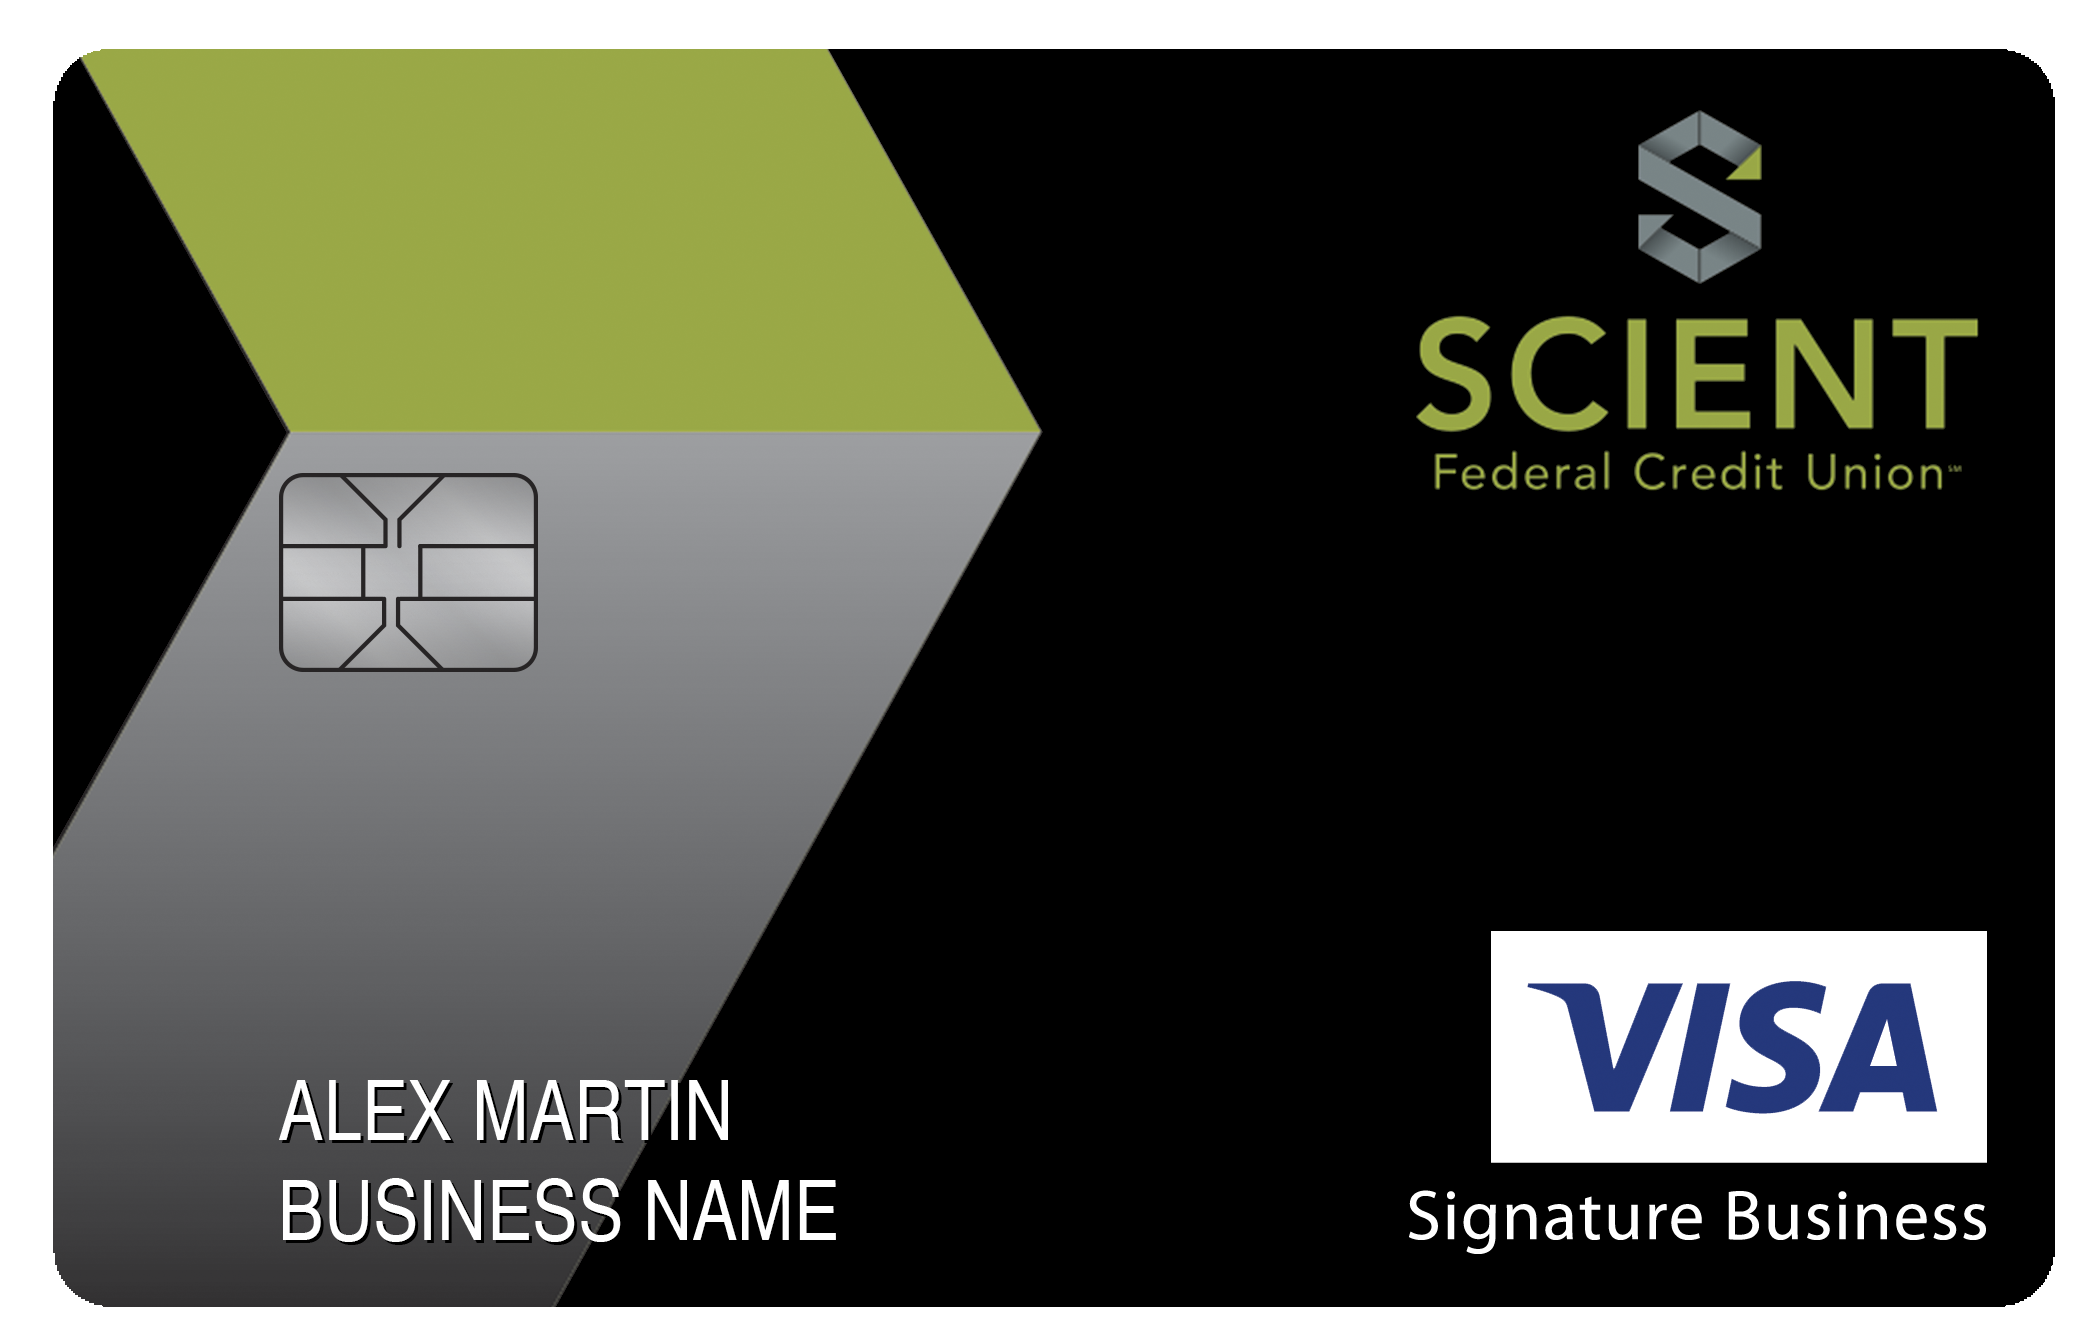 Scient Federal Credit Union Smart Business Rewards Card